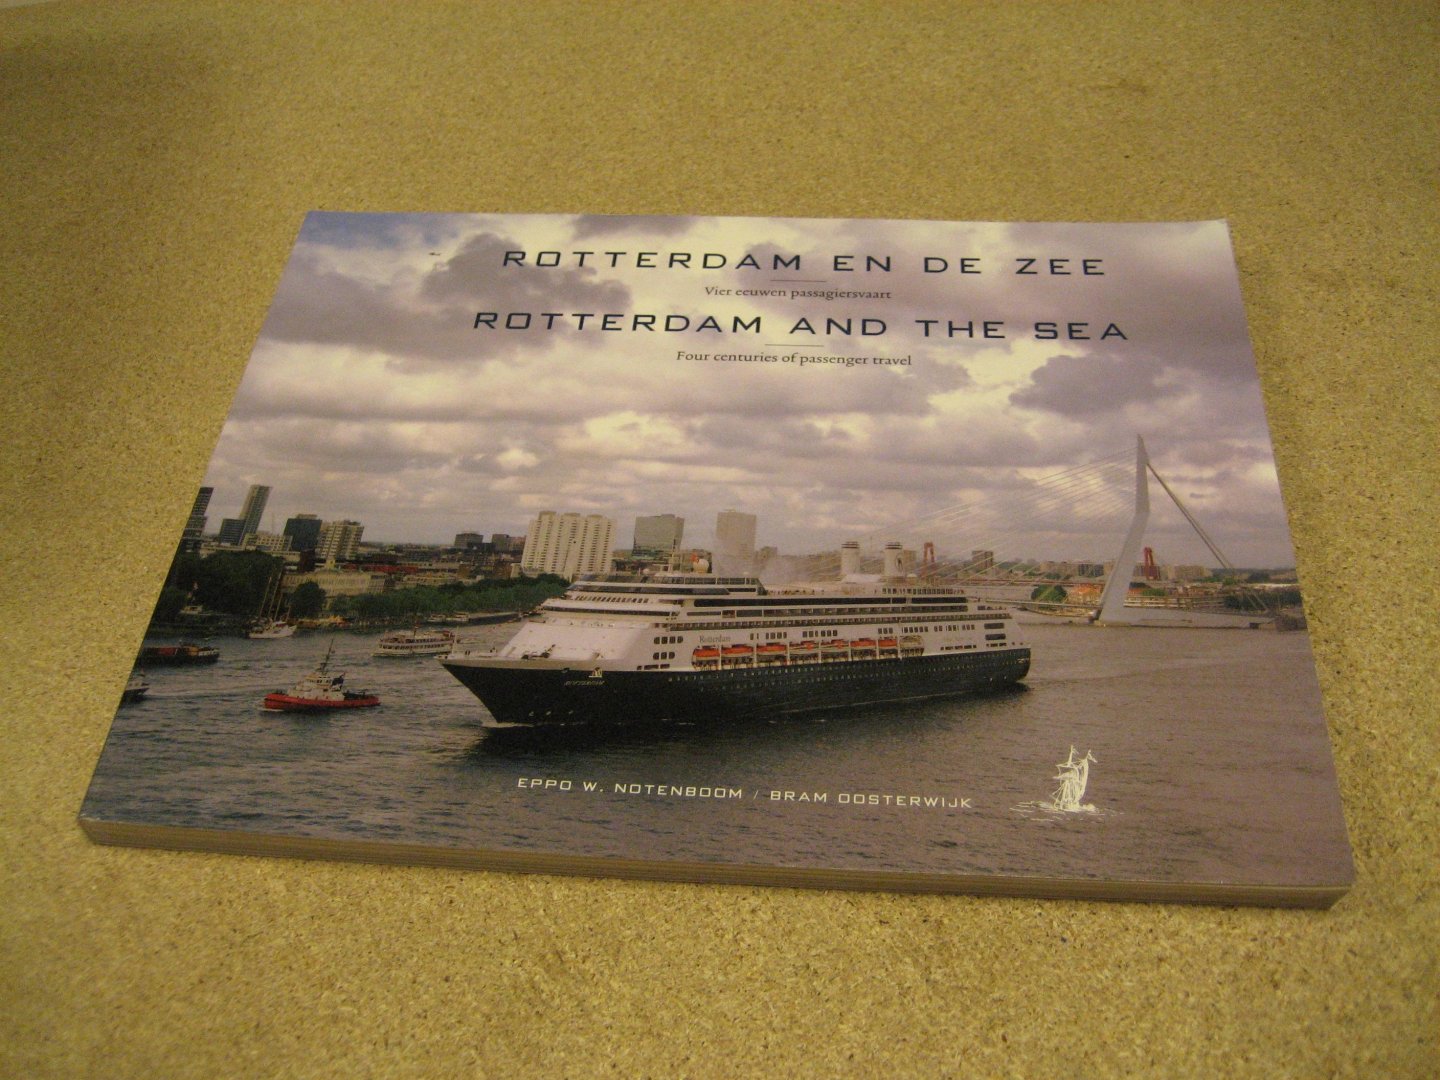 Notenboom, Eppo W. (fotografie) & Oosterwijk, Bram (tekst) - Rotterdam en de zee. Vier eeuwen passagiersvaart / Rotterdam and the sea. Four centuries of passenger travel